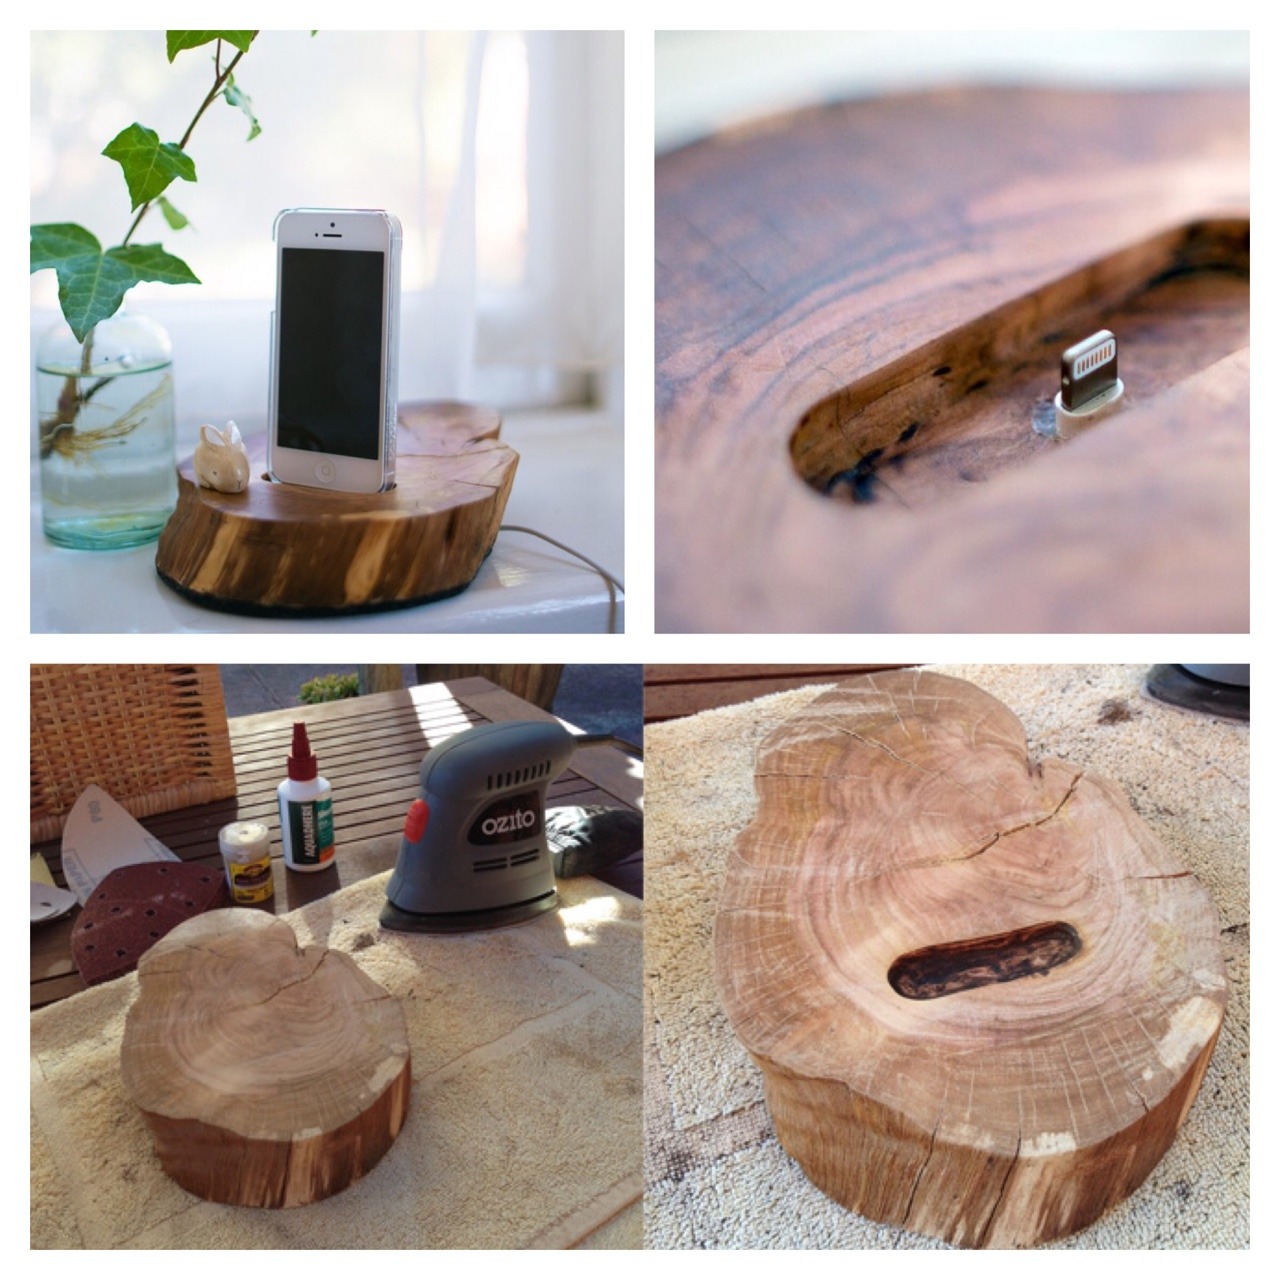 DIY Wooden iPhone Dock Full Tutorial: - DIY CRAFTS &amp; MORE